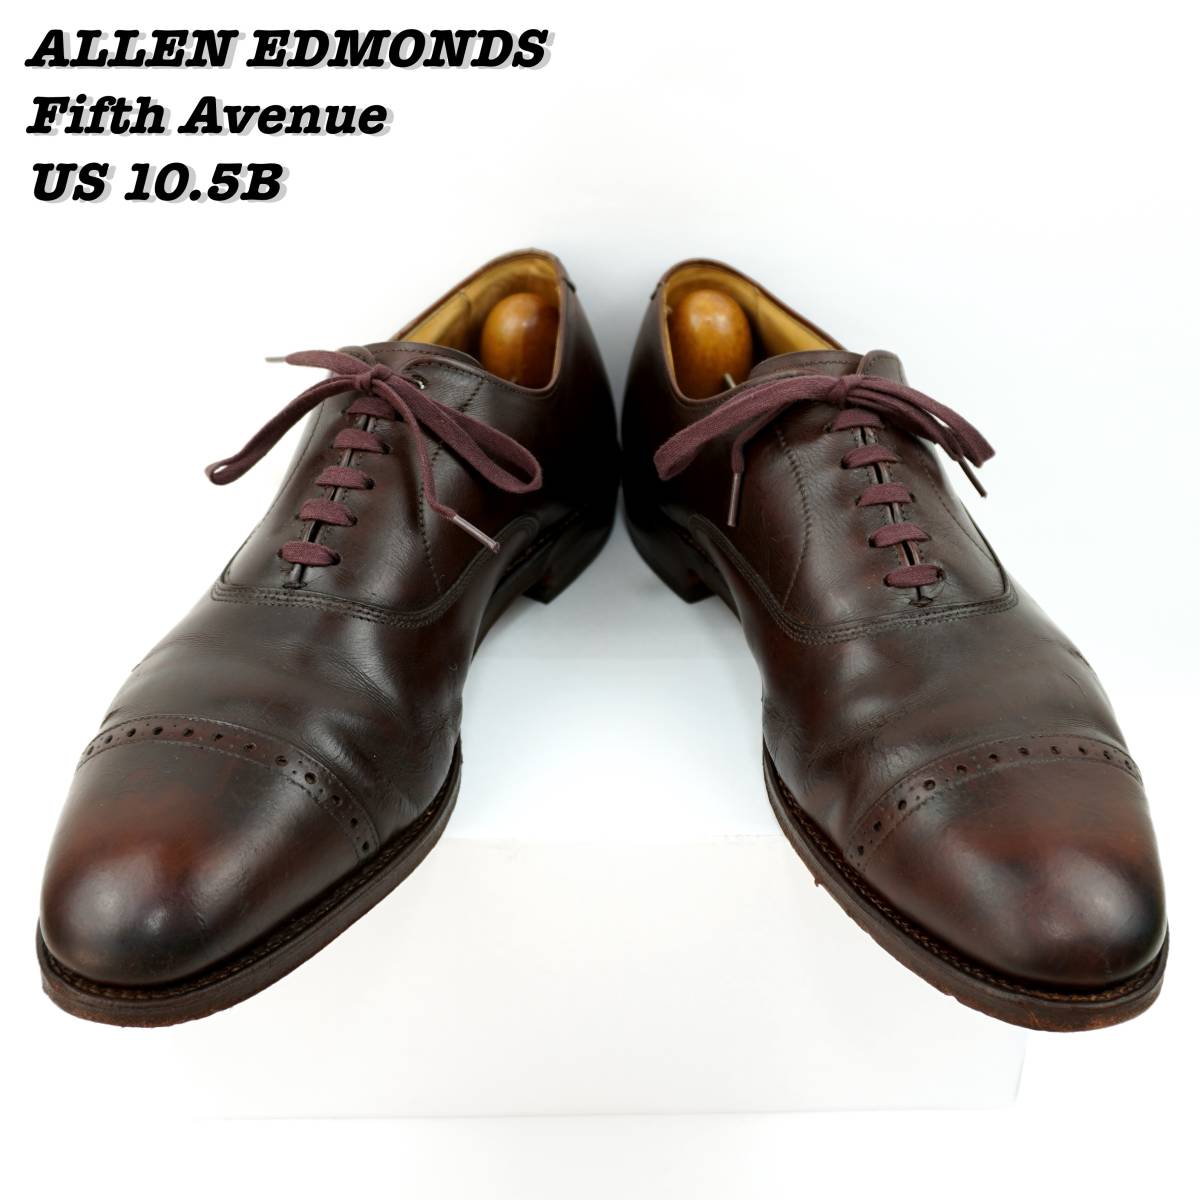 ALLEN EDMONDS Fifth Avenue 1980s US10.5B Vintage アレンエドモンズ フィフスアベニュー 1980年代 ヴィンテージ 28.5cm 革靴